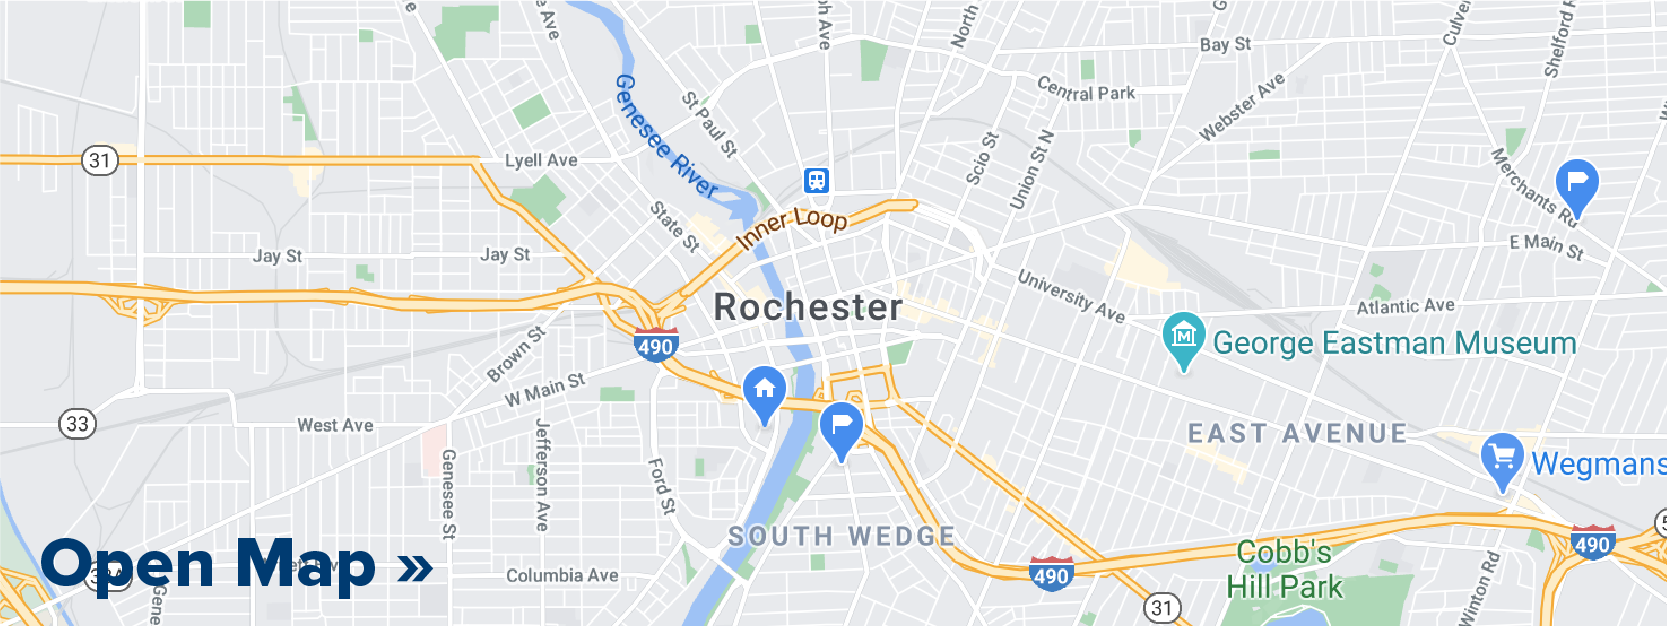 Google Map of Rochester NY